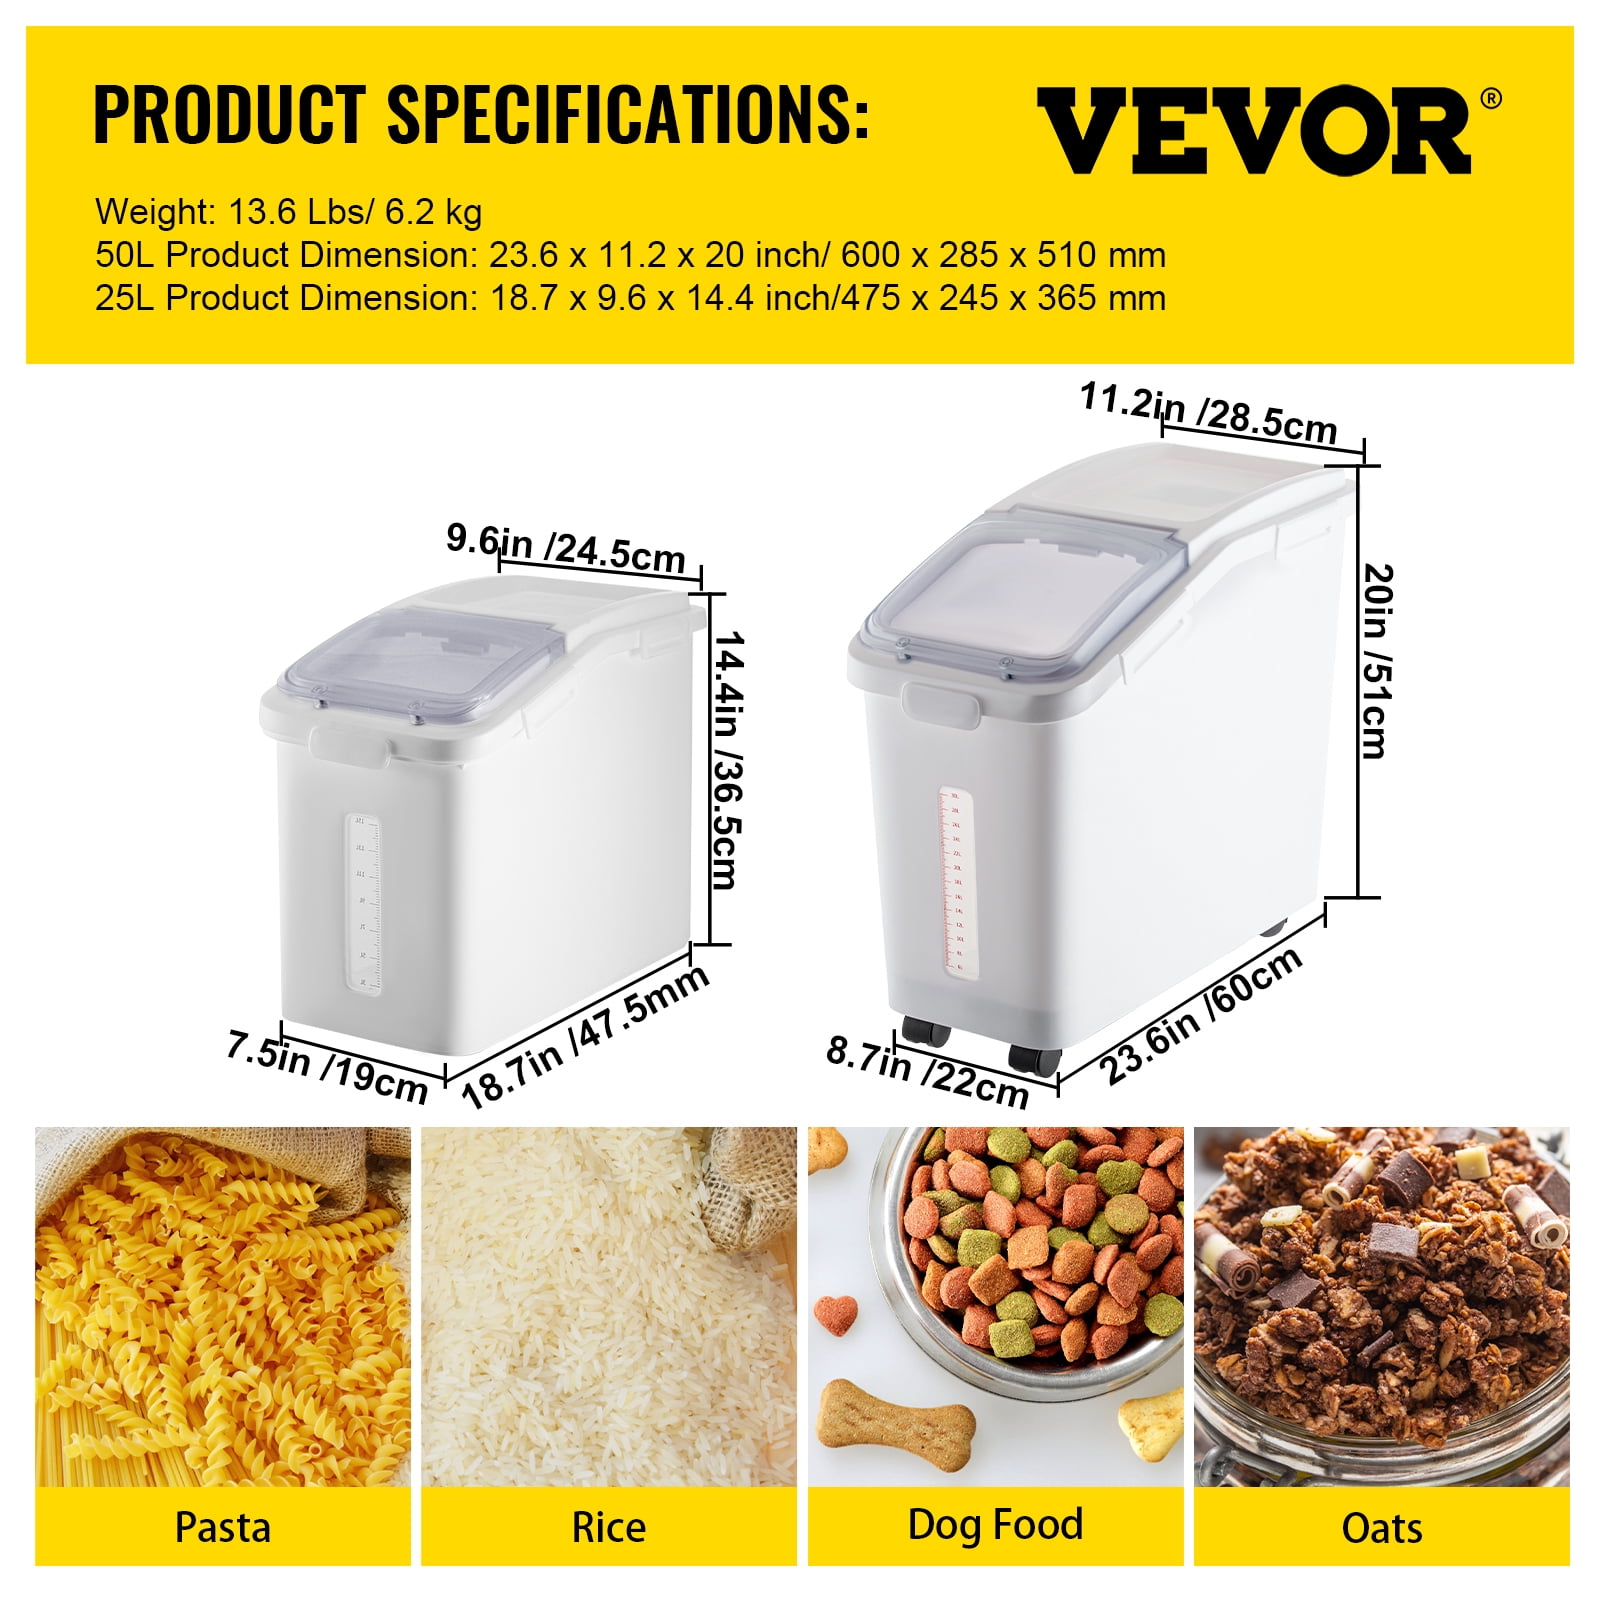 VEVOR Ingredient Storage Bin 11.4 Gal. Capacity Commercial Shelf-storage  Ingredient Bin 280 Cup Flour Bins with Wheels, White SLMTBDDWC50LYW8LNV0 -  The Home Depot